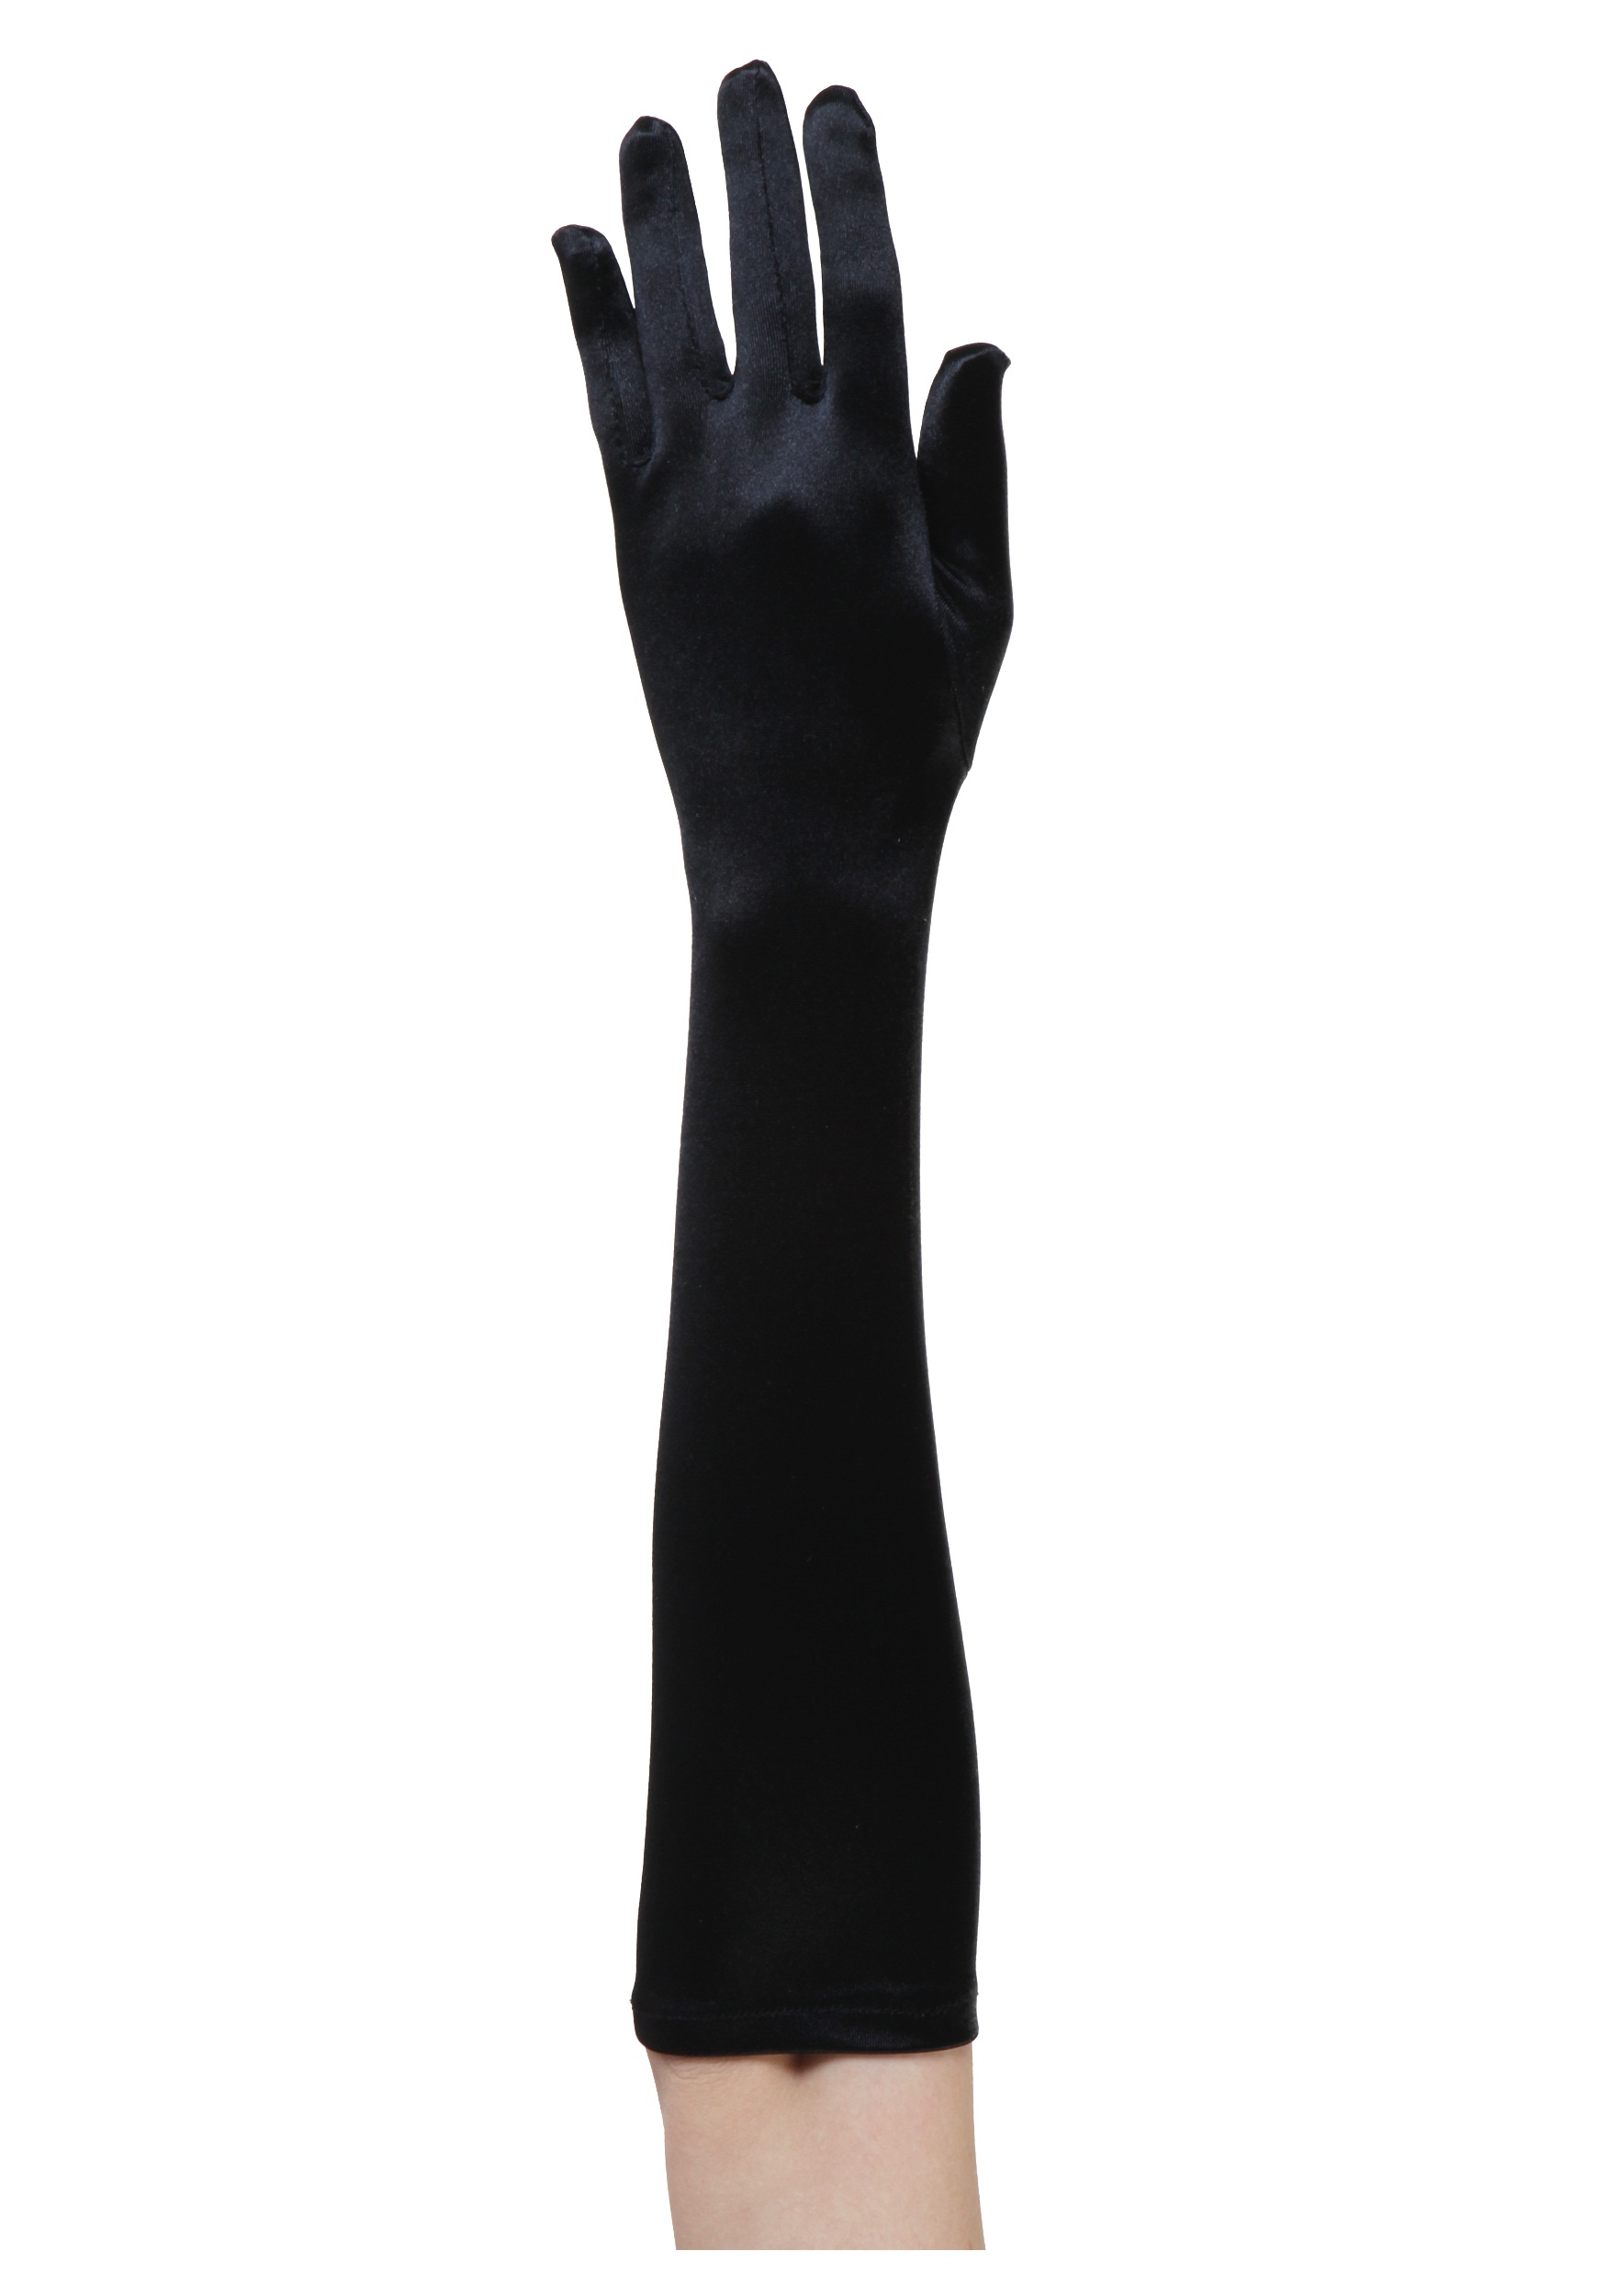 https://images.halloweencostumes.com.mx/products/4963/1-1/guantes-negros-para-disfraz-flapper.jpg